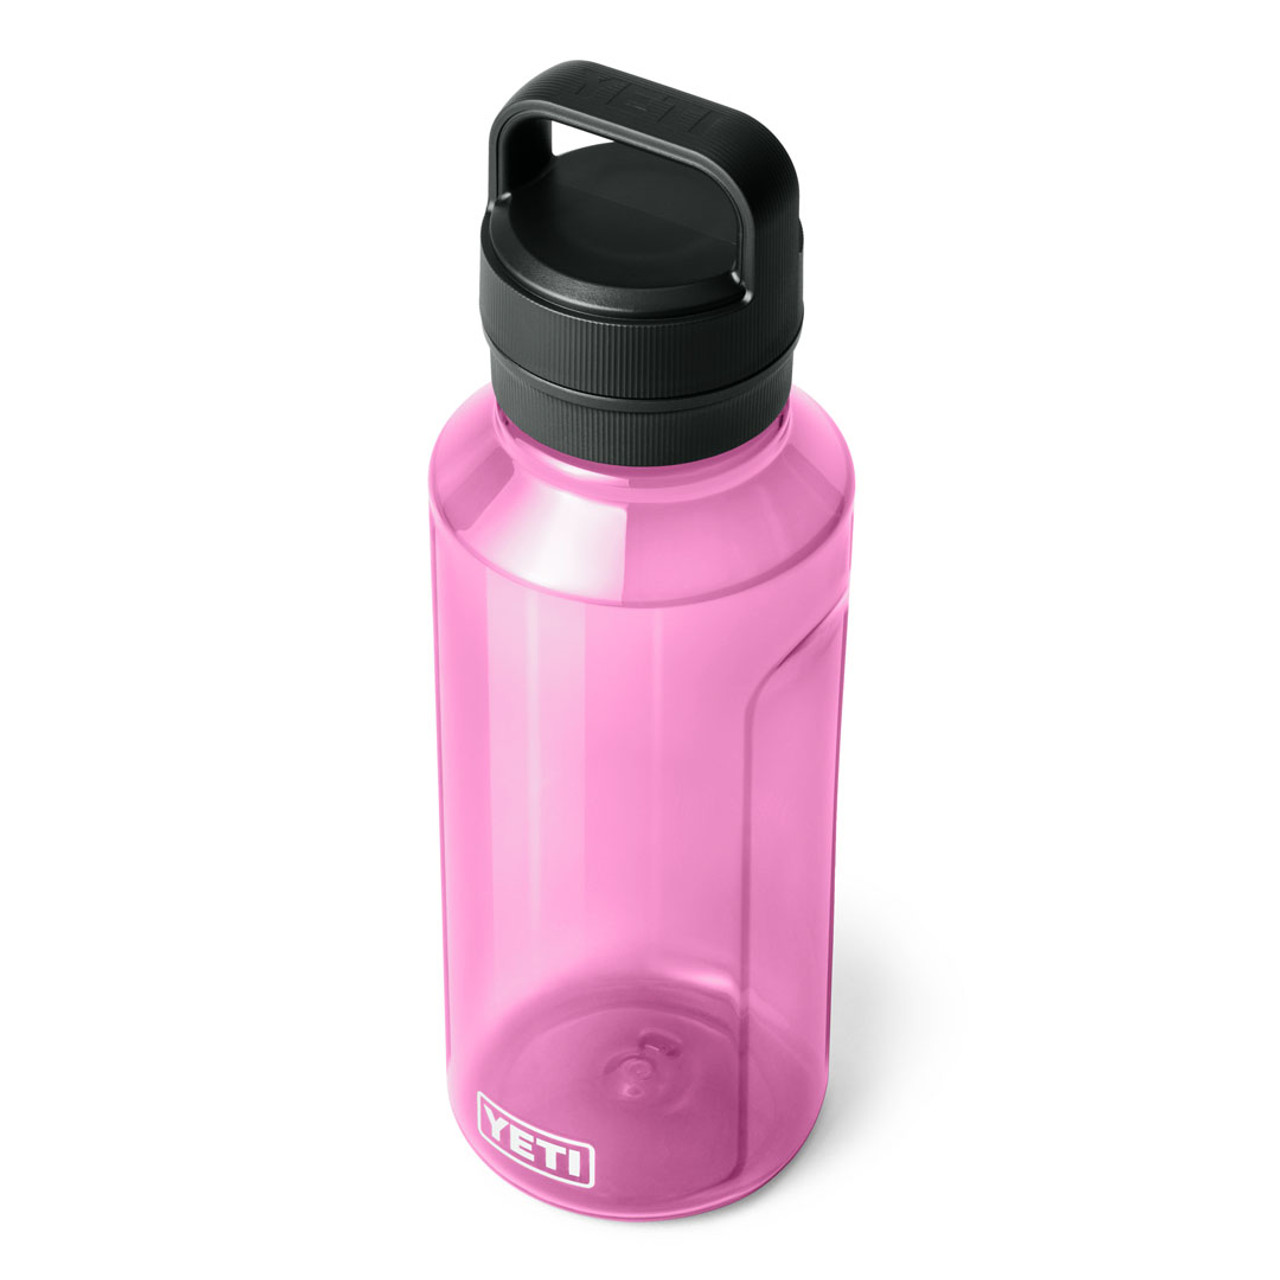 Yeti, Other, Yeti Yonder L 34 Oz Water Bottle Charcoal